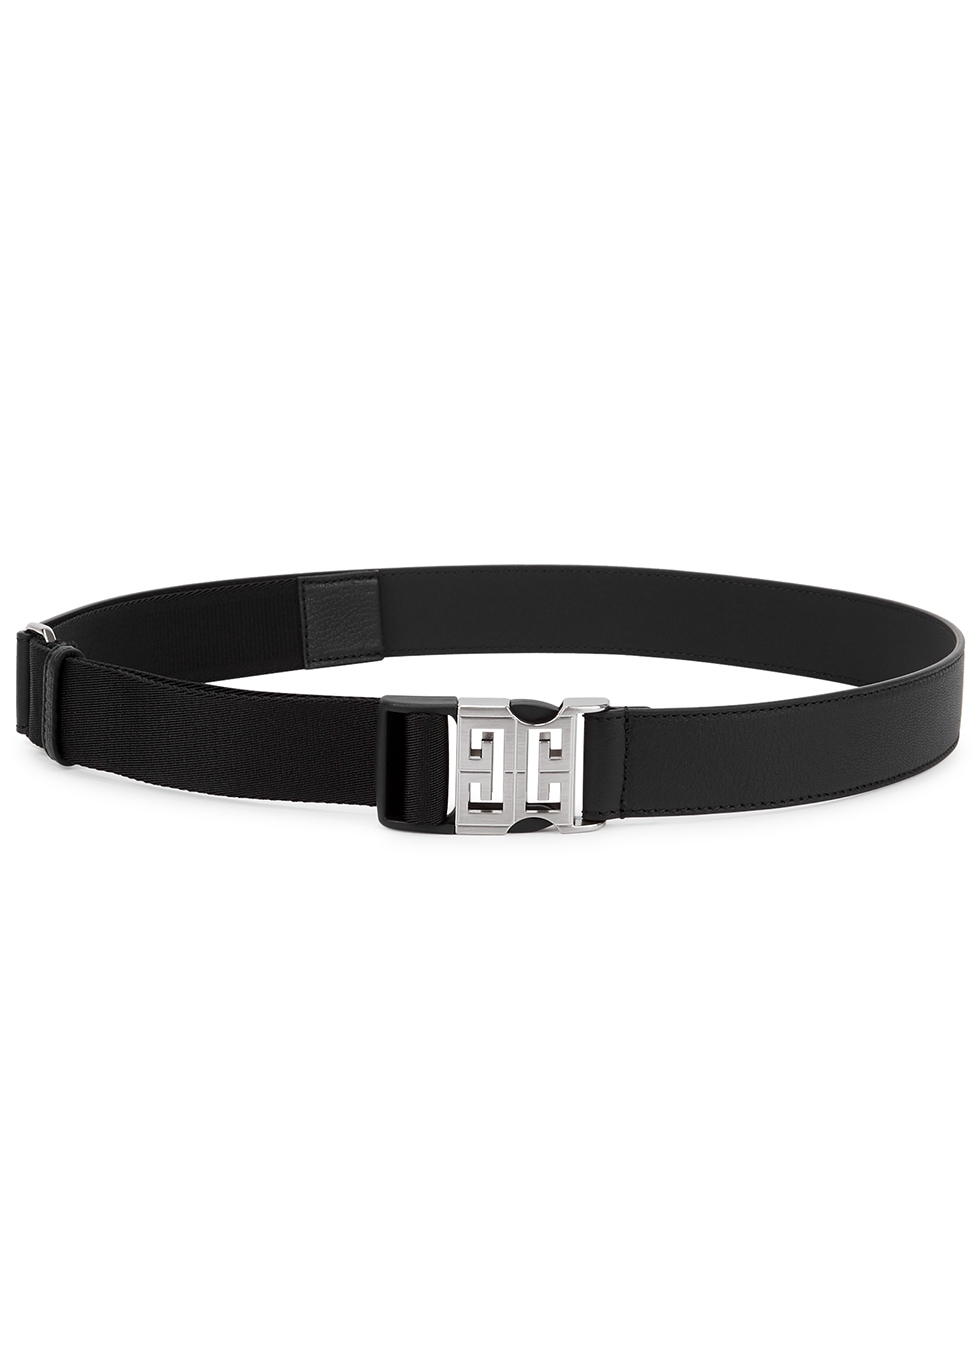 Givenchy 4G Release Buckle black leather belt - Harvey Nichols